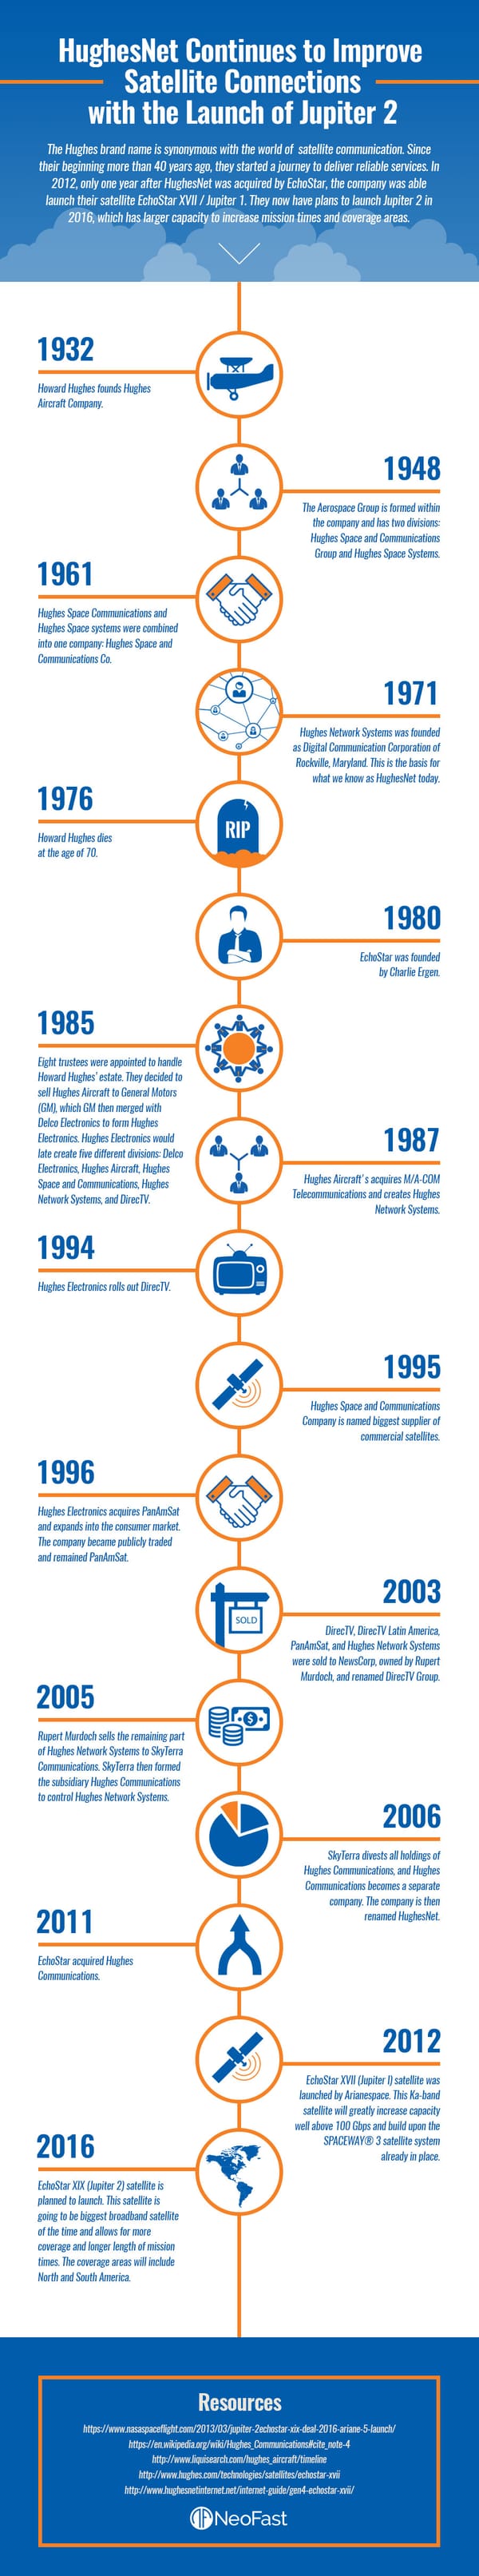 A Graphic History of the Satellite Internet Provider HughesNet